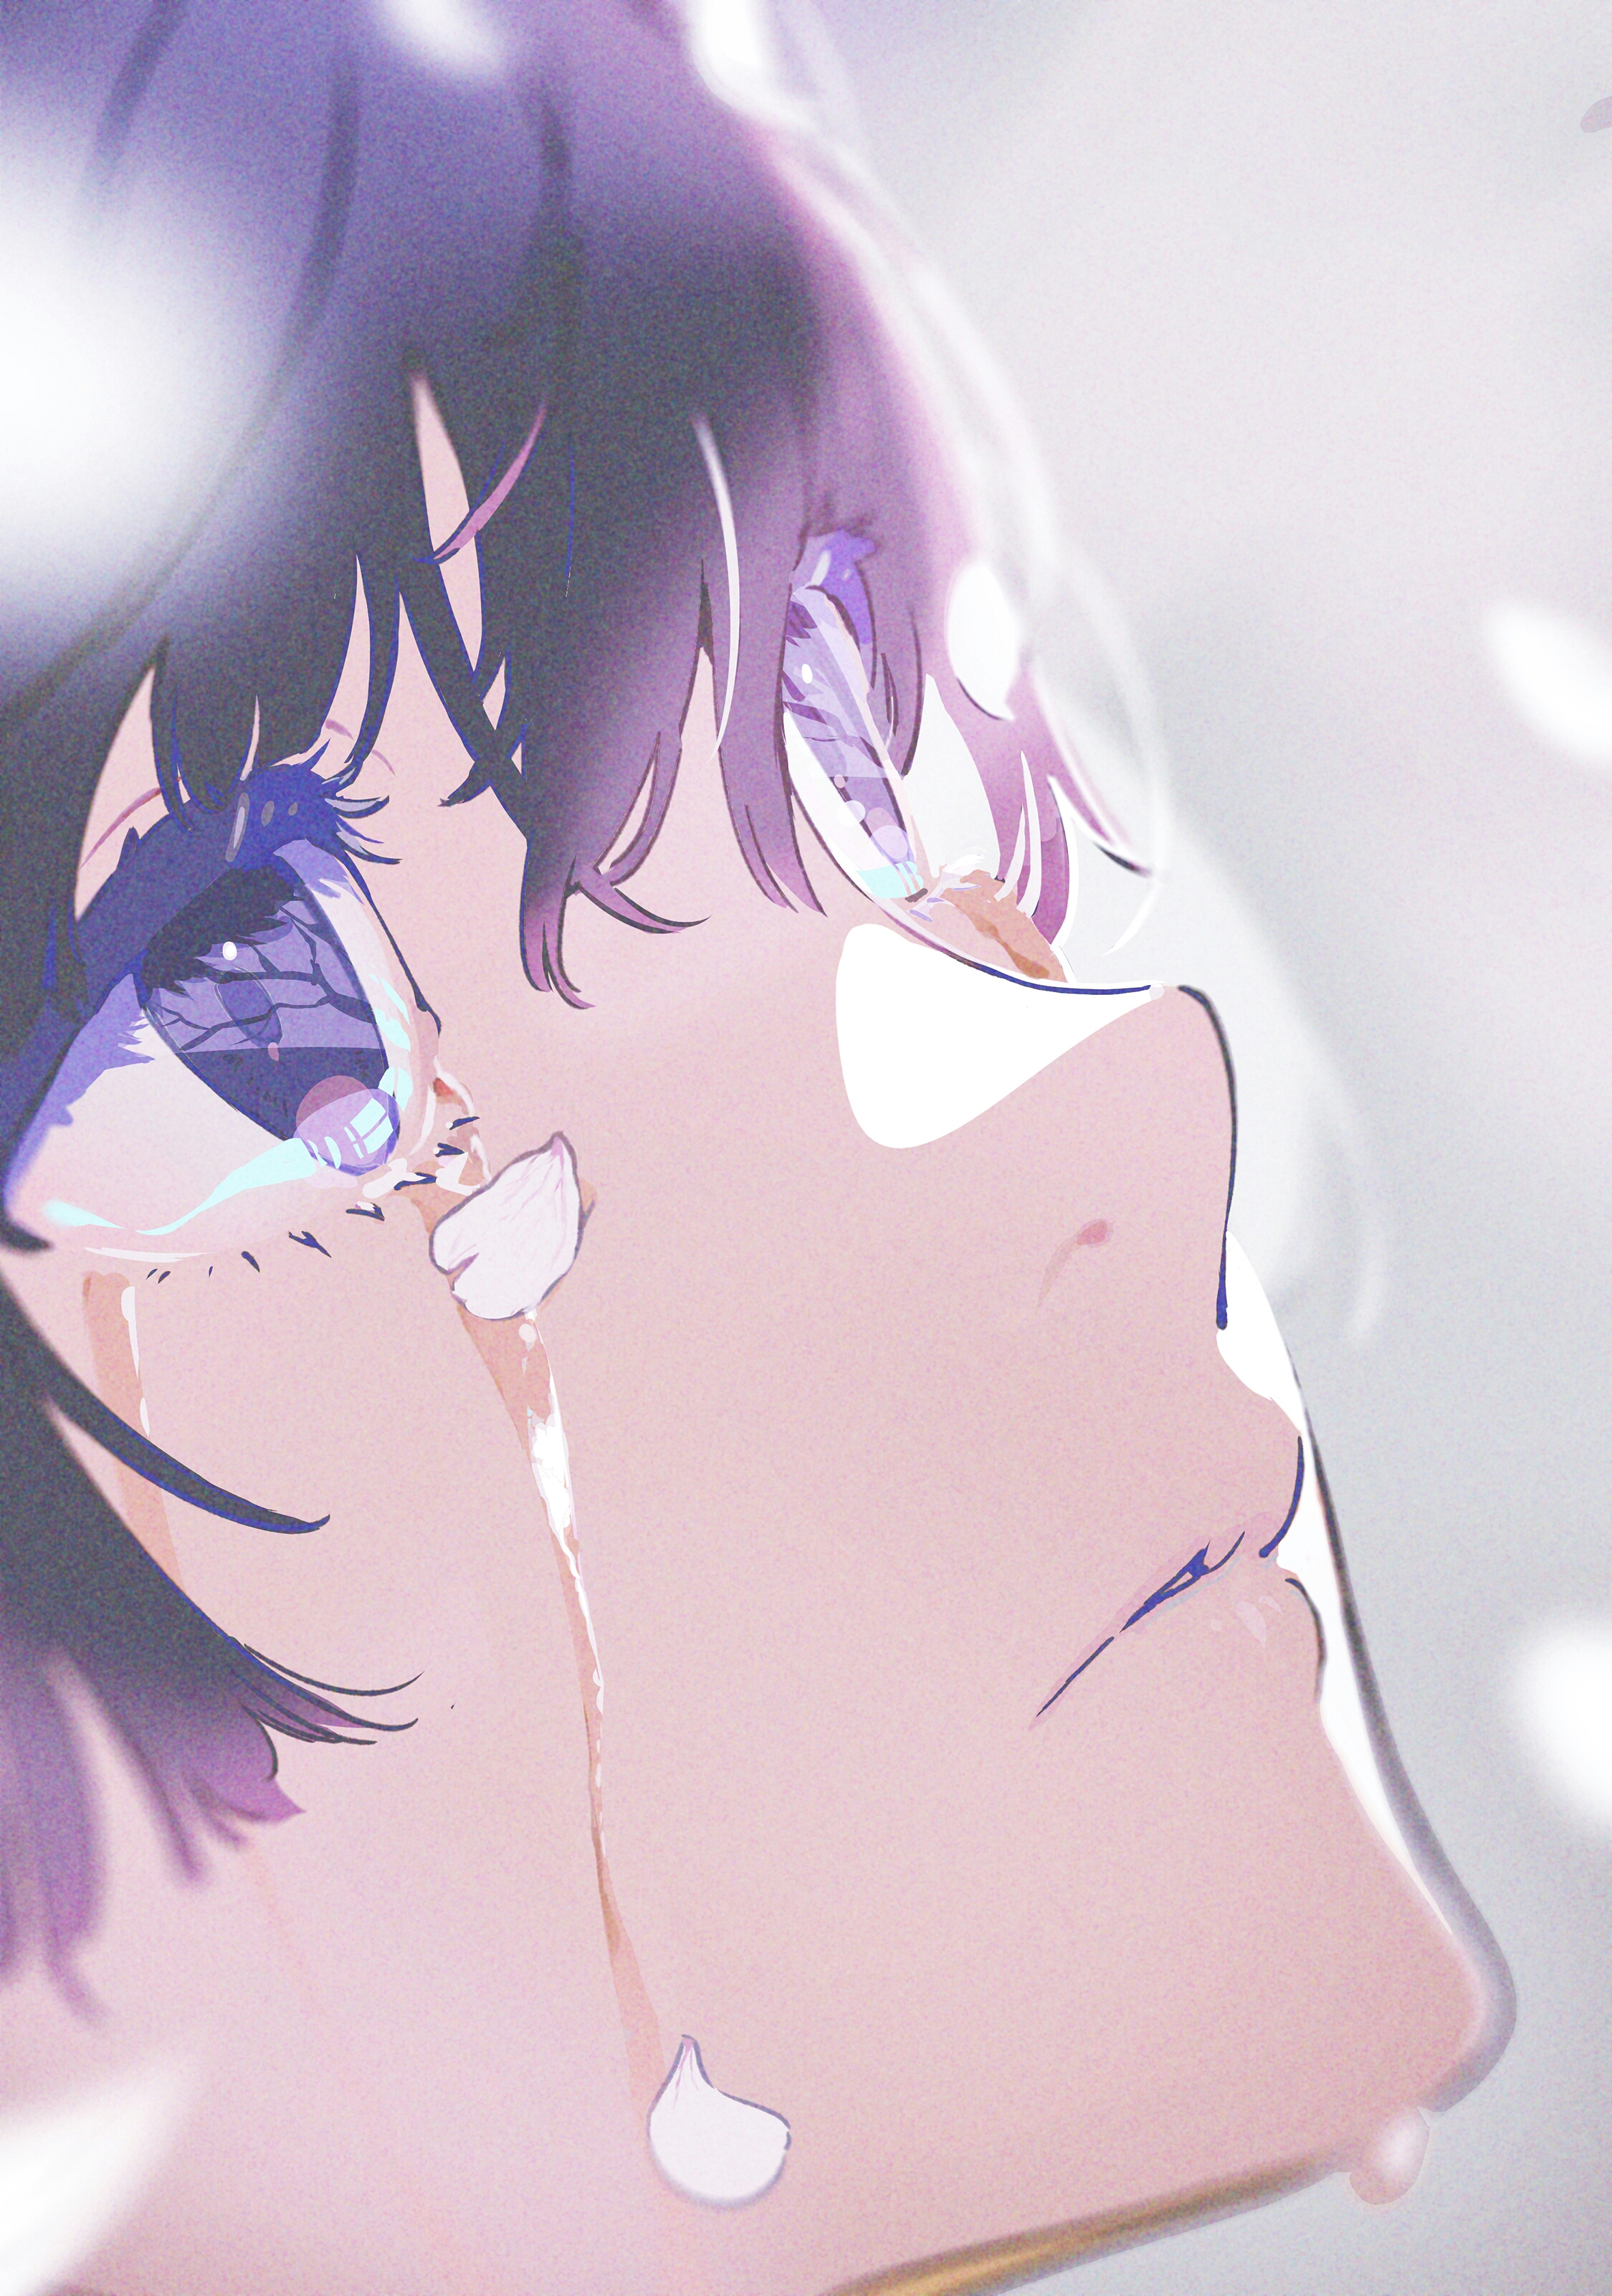 Crying Anime Guy GIFs | Tenor